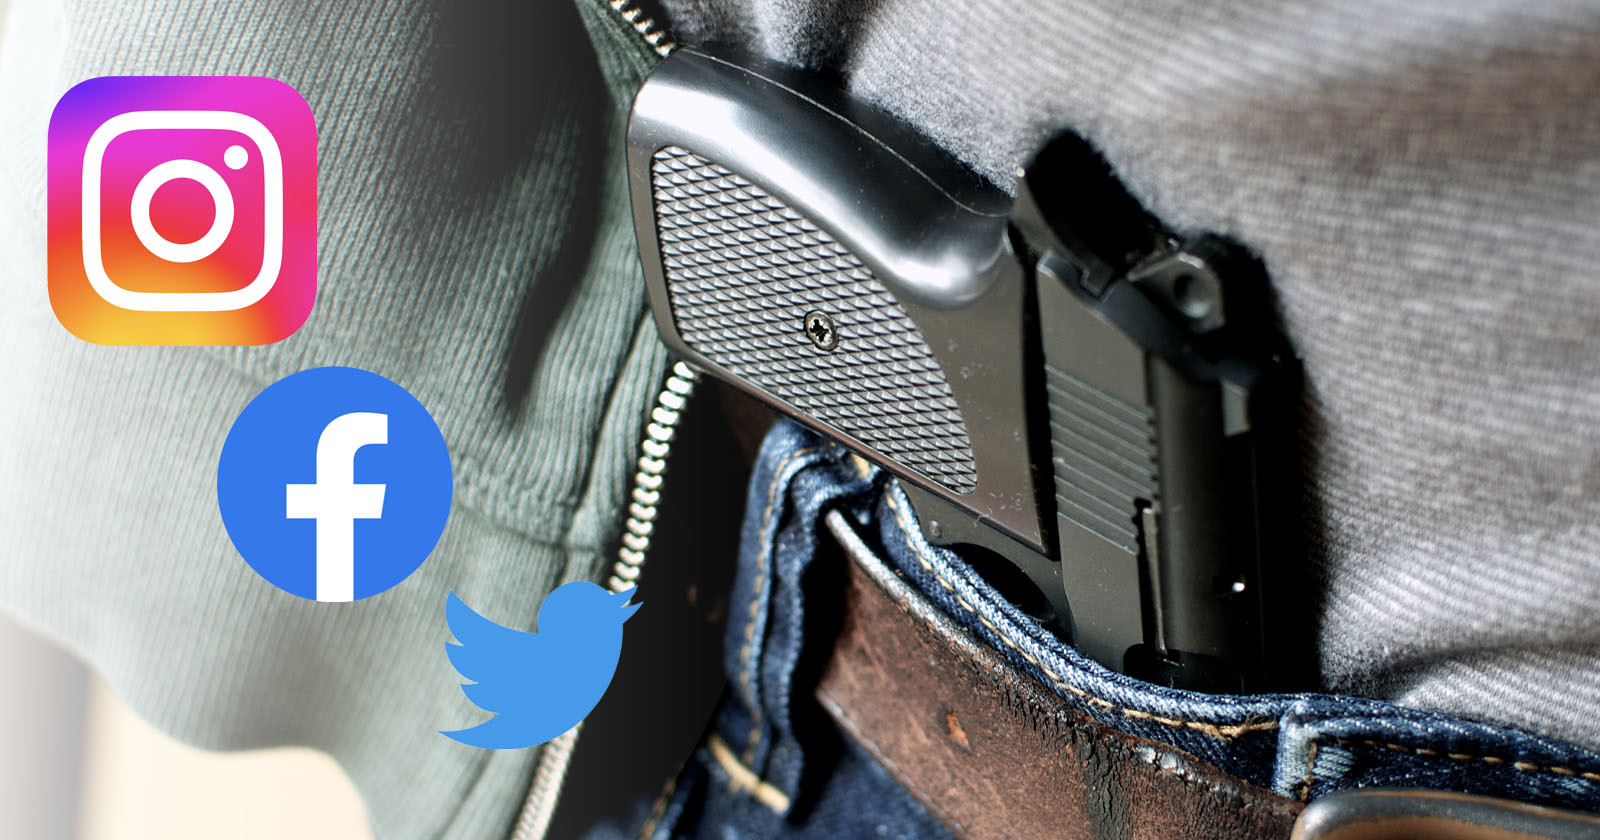 Gun Applicants in NY Must Provide List of Social Media Accounts